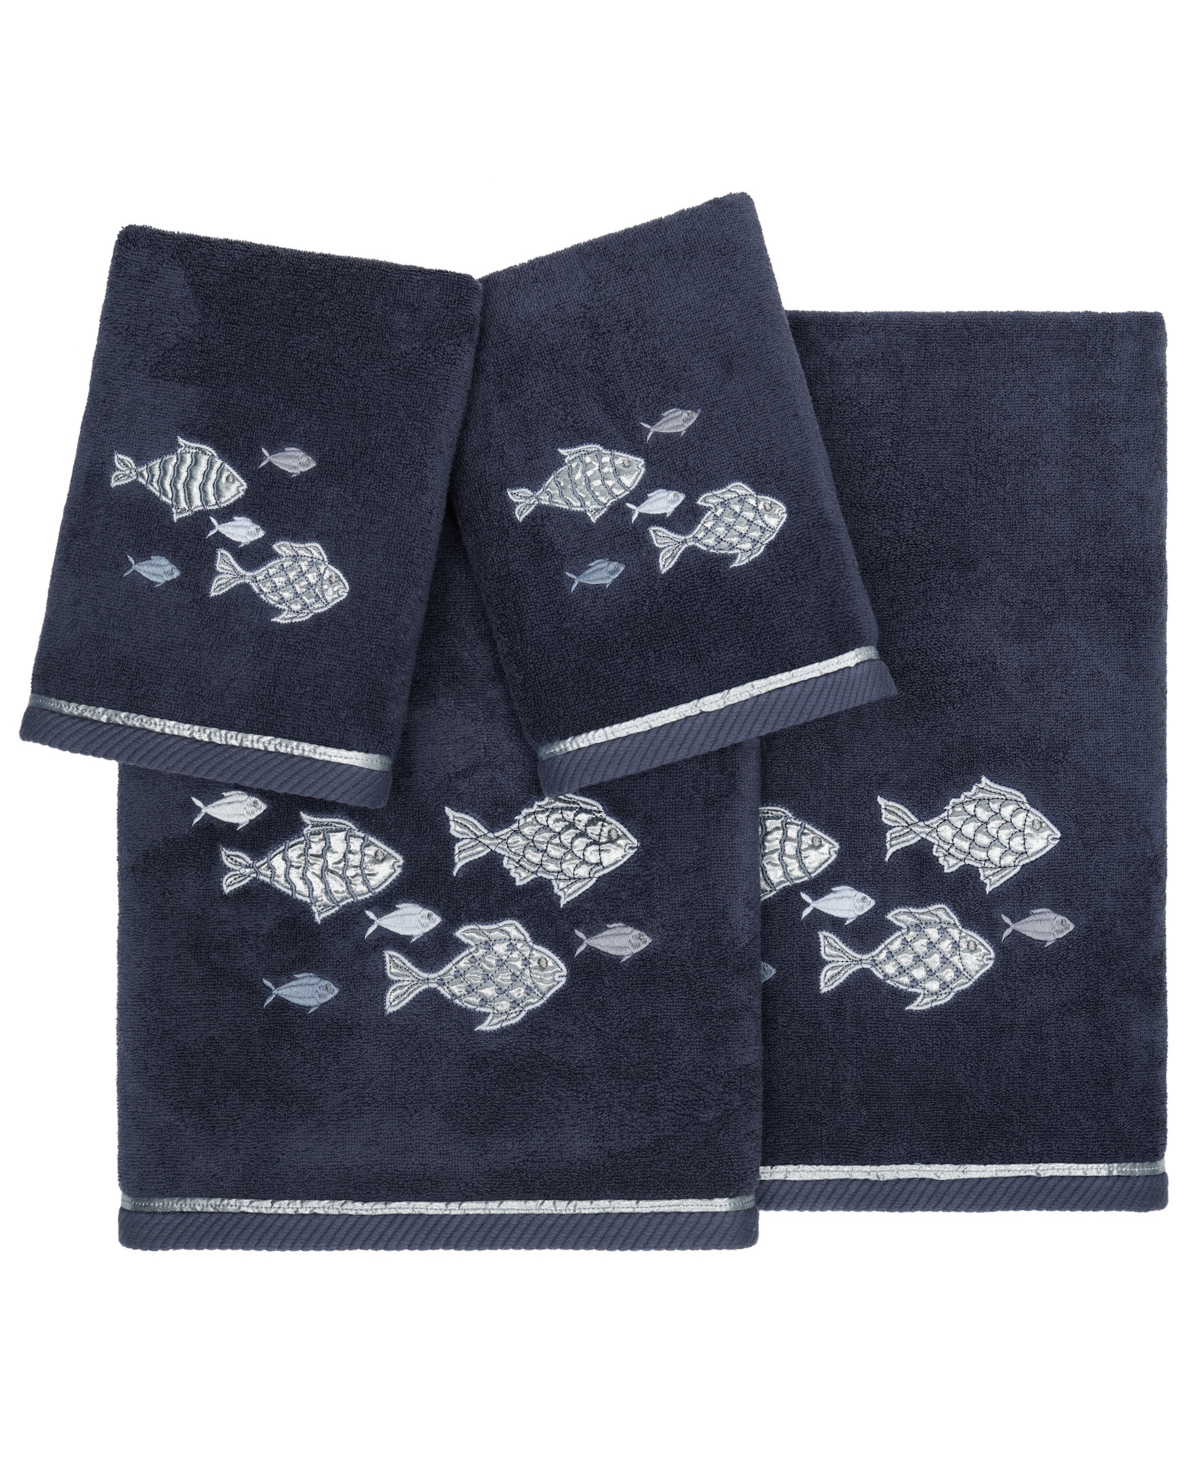 Linum Home Textiles Turkish Cotton Figi Embellished Towel Set, 4 Piece In Marine